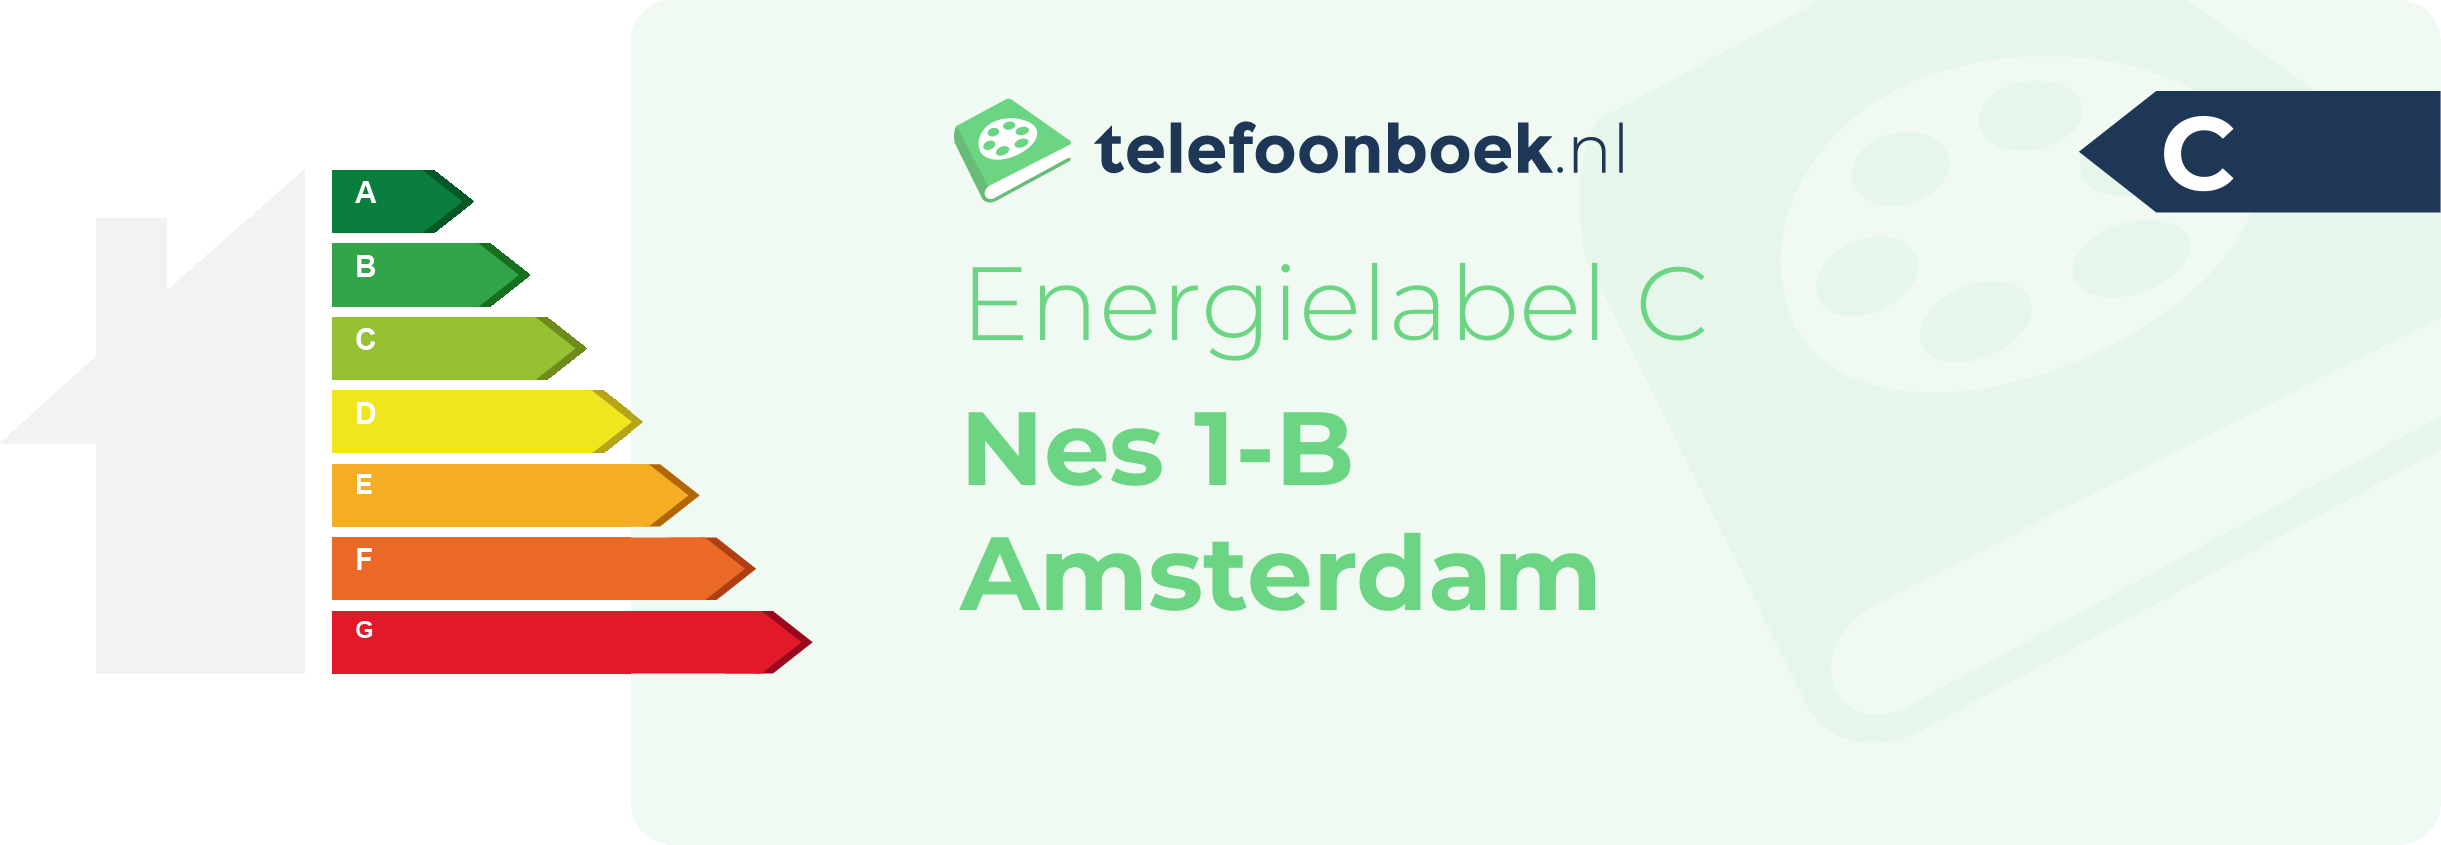 Energielabel Nes 1-B Amsterdam